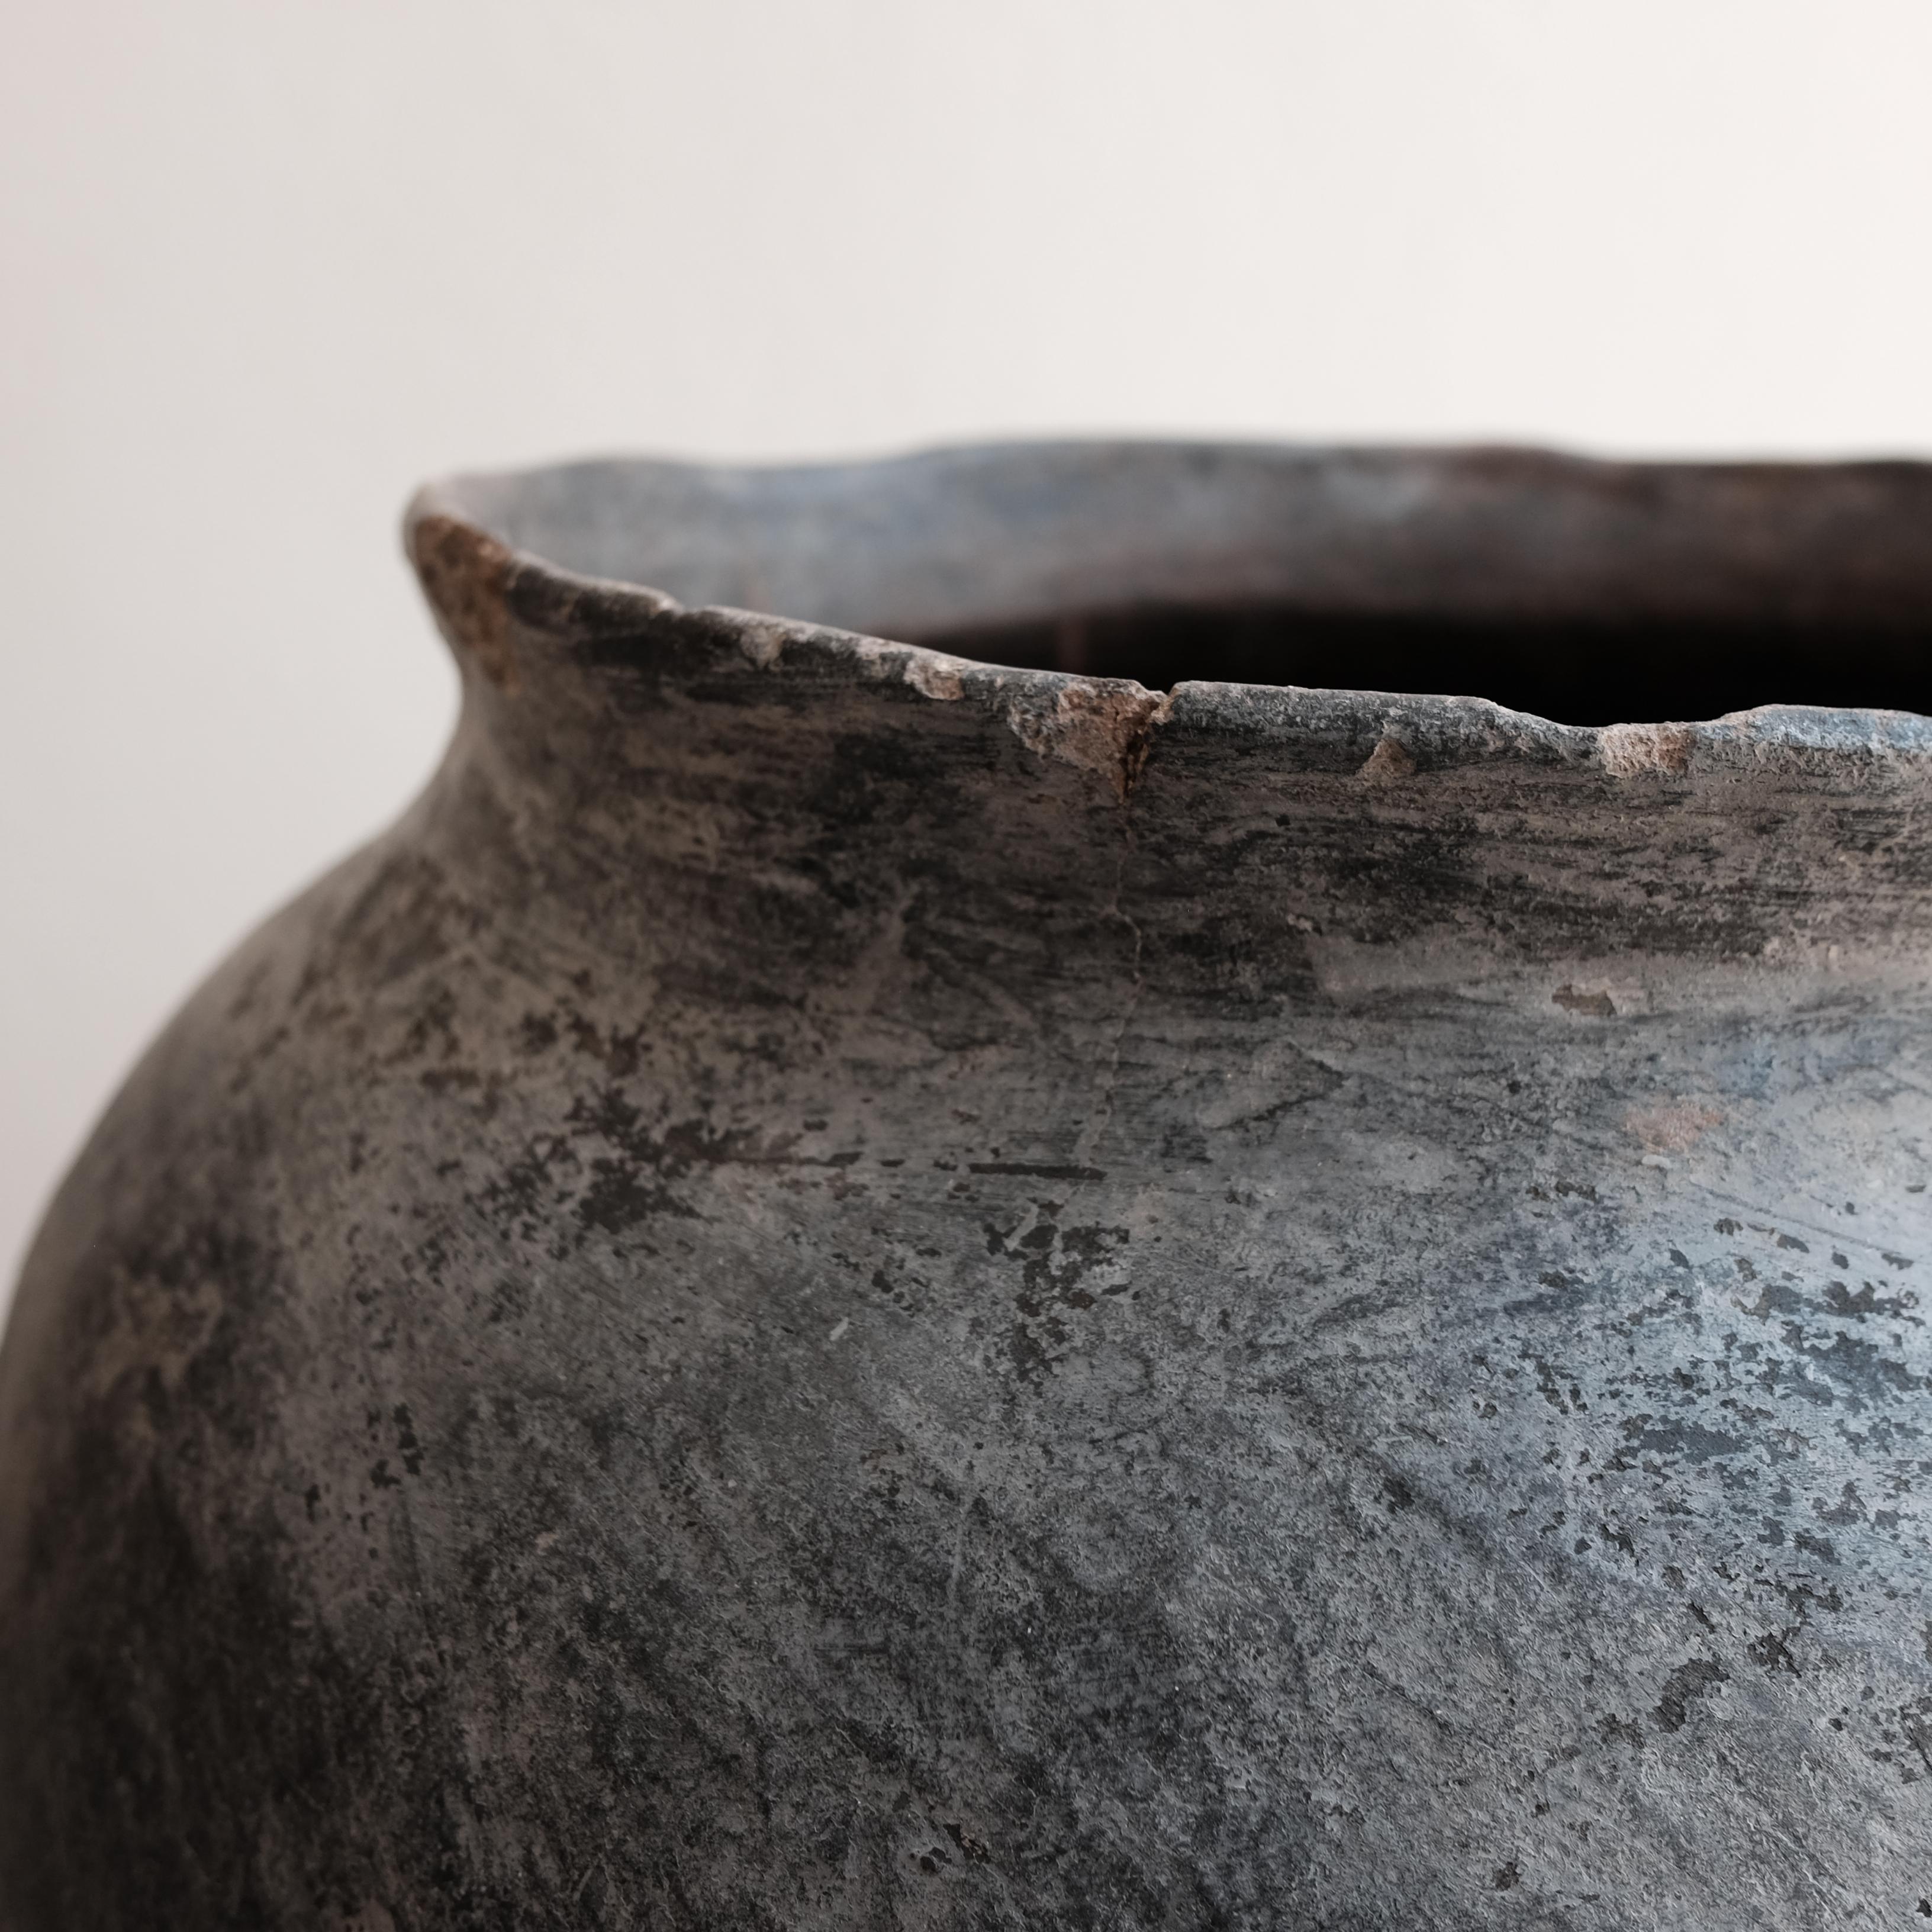 Clay Primitive Styled Pot from Oaxaca